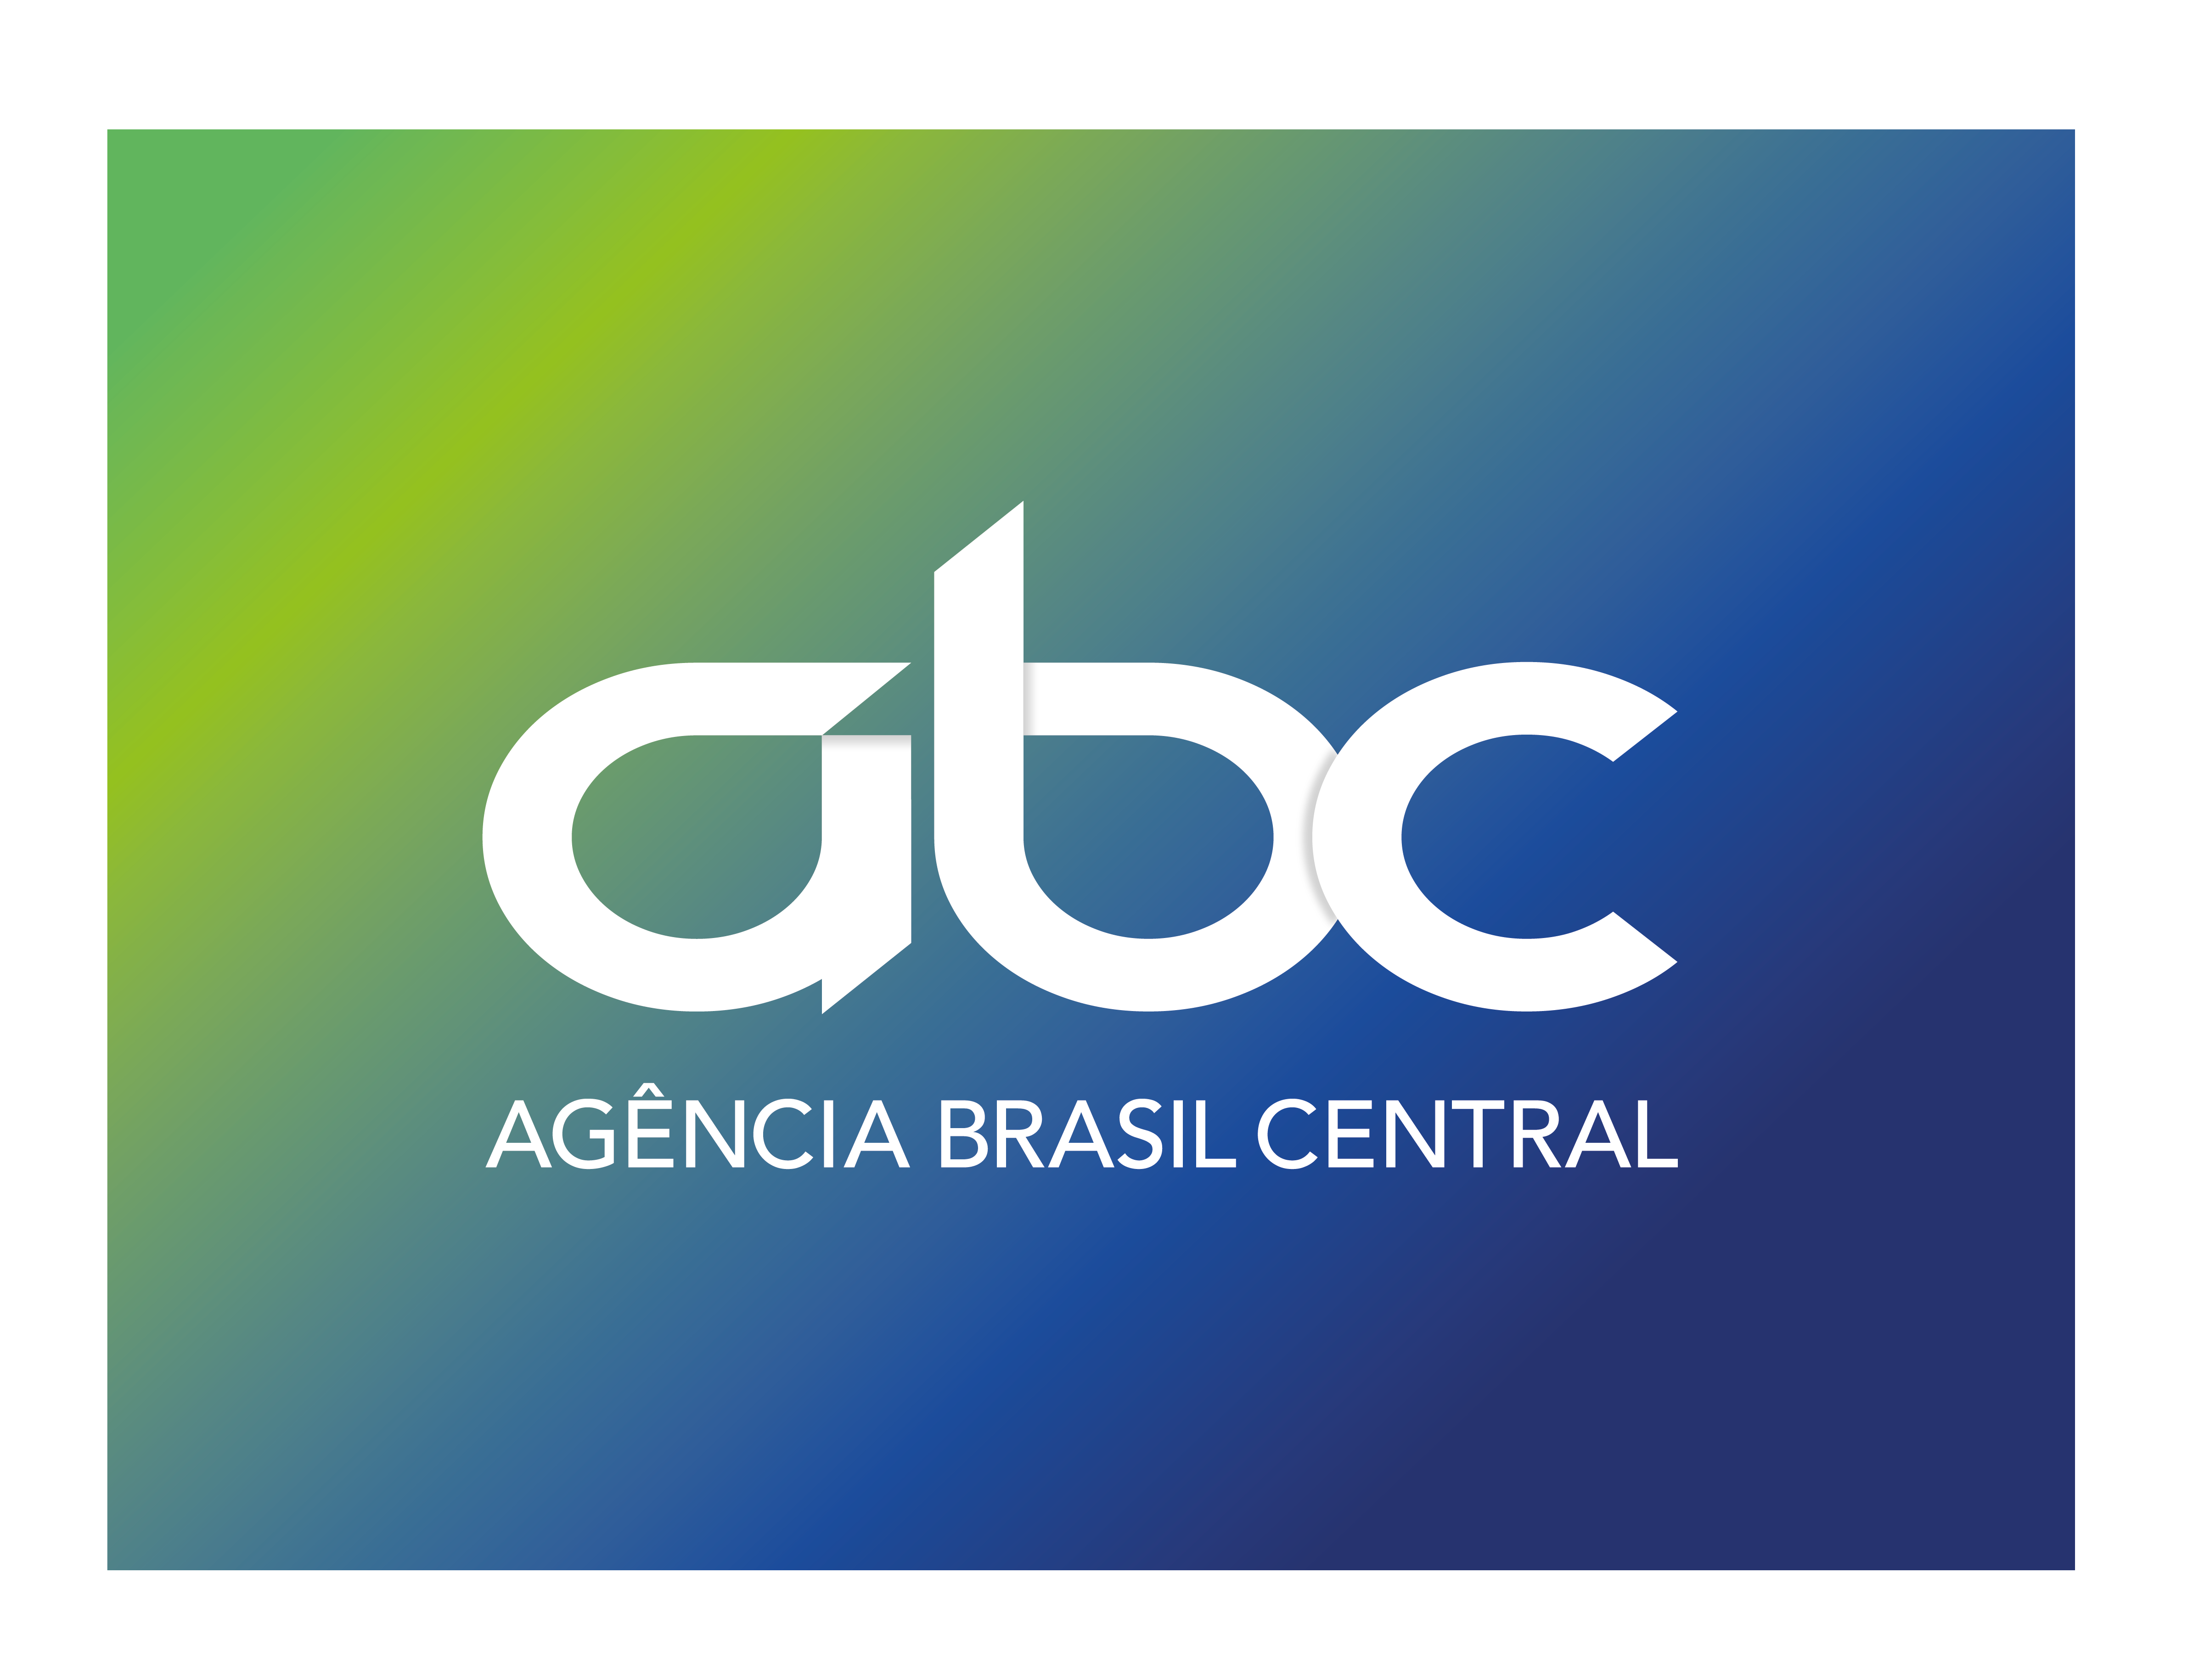 Logomarca da Agência Brasil Central